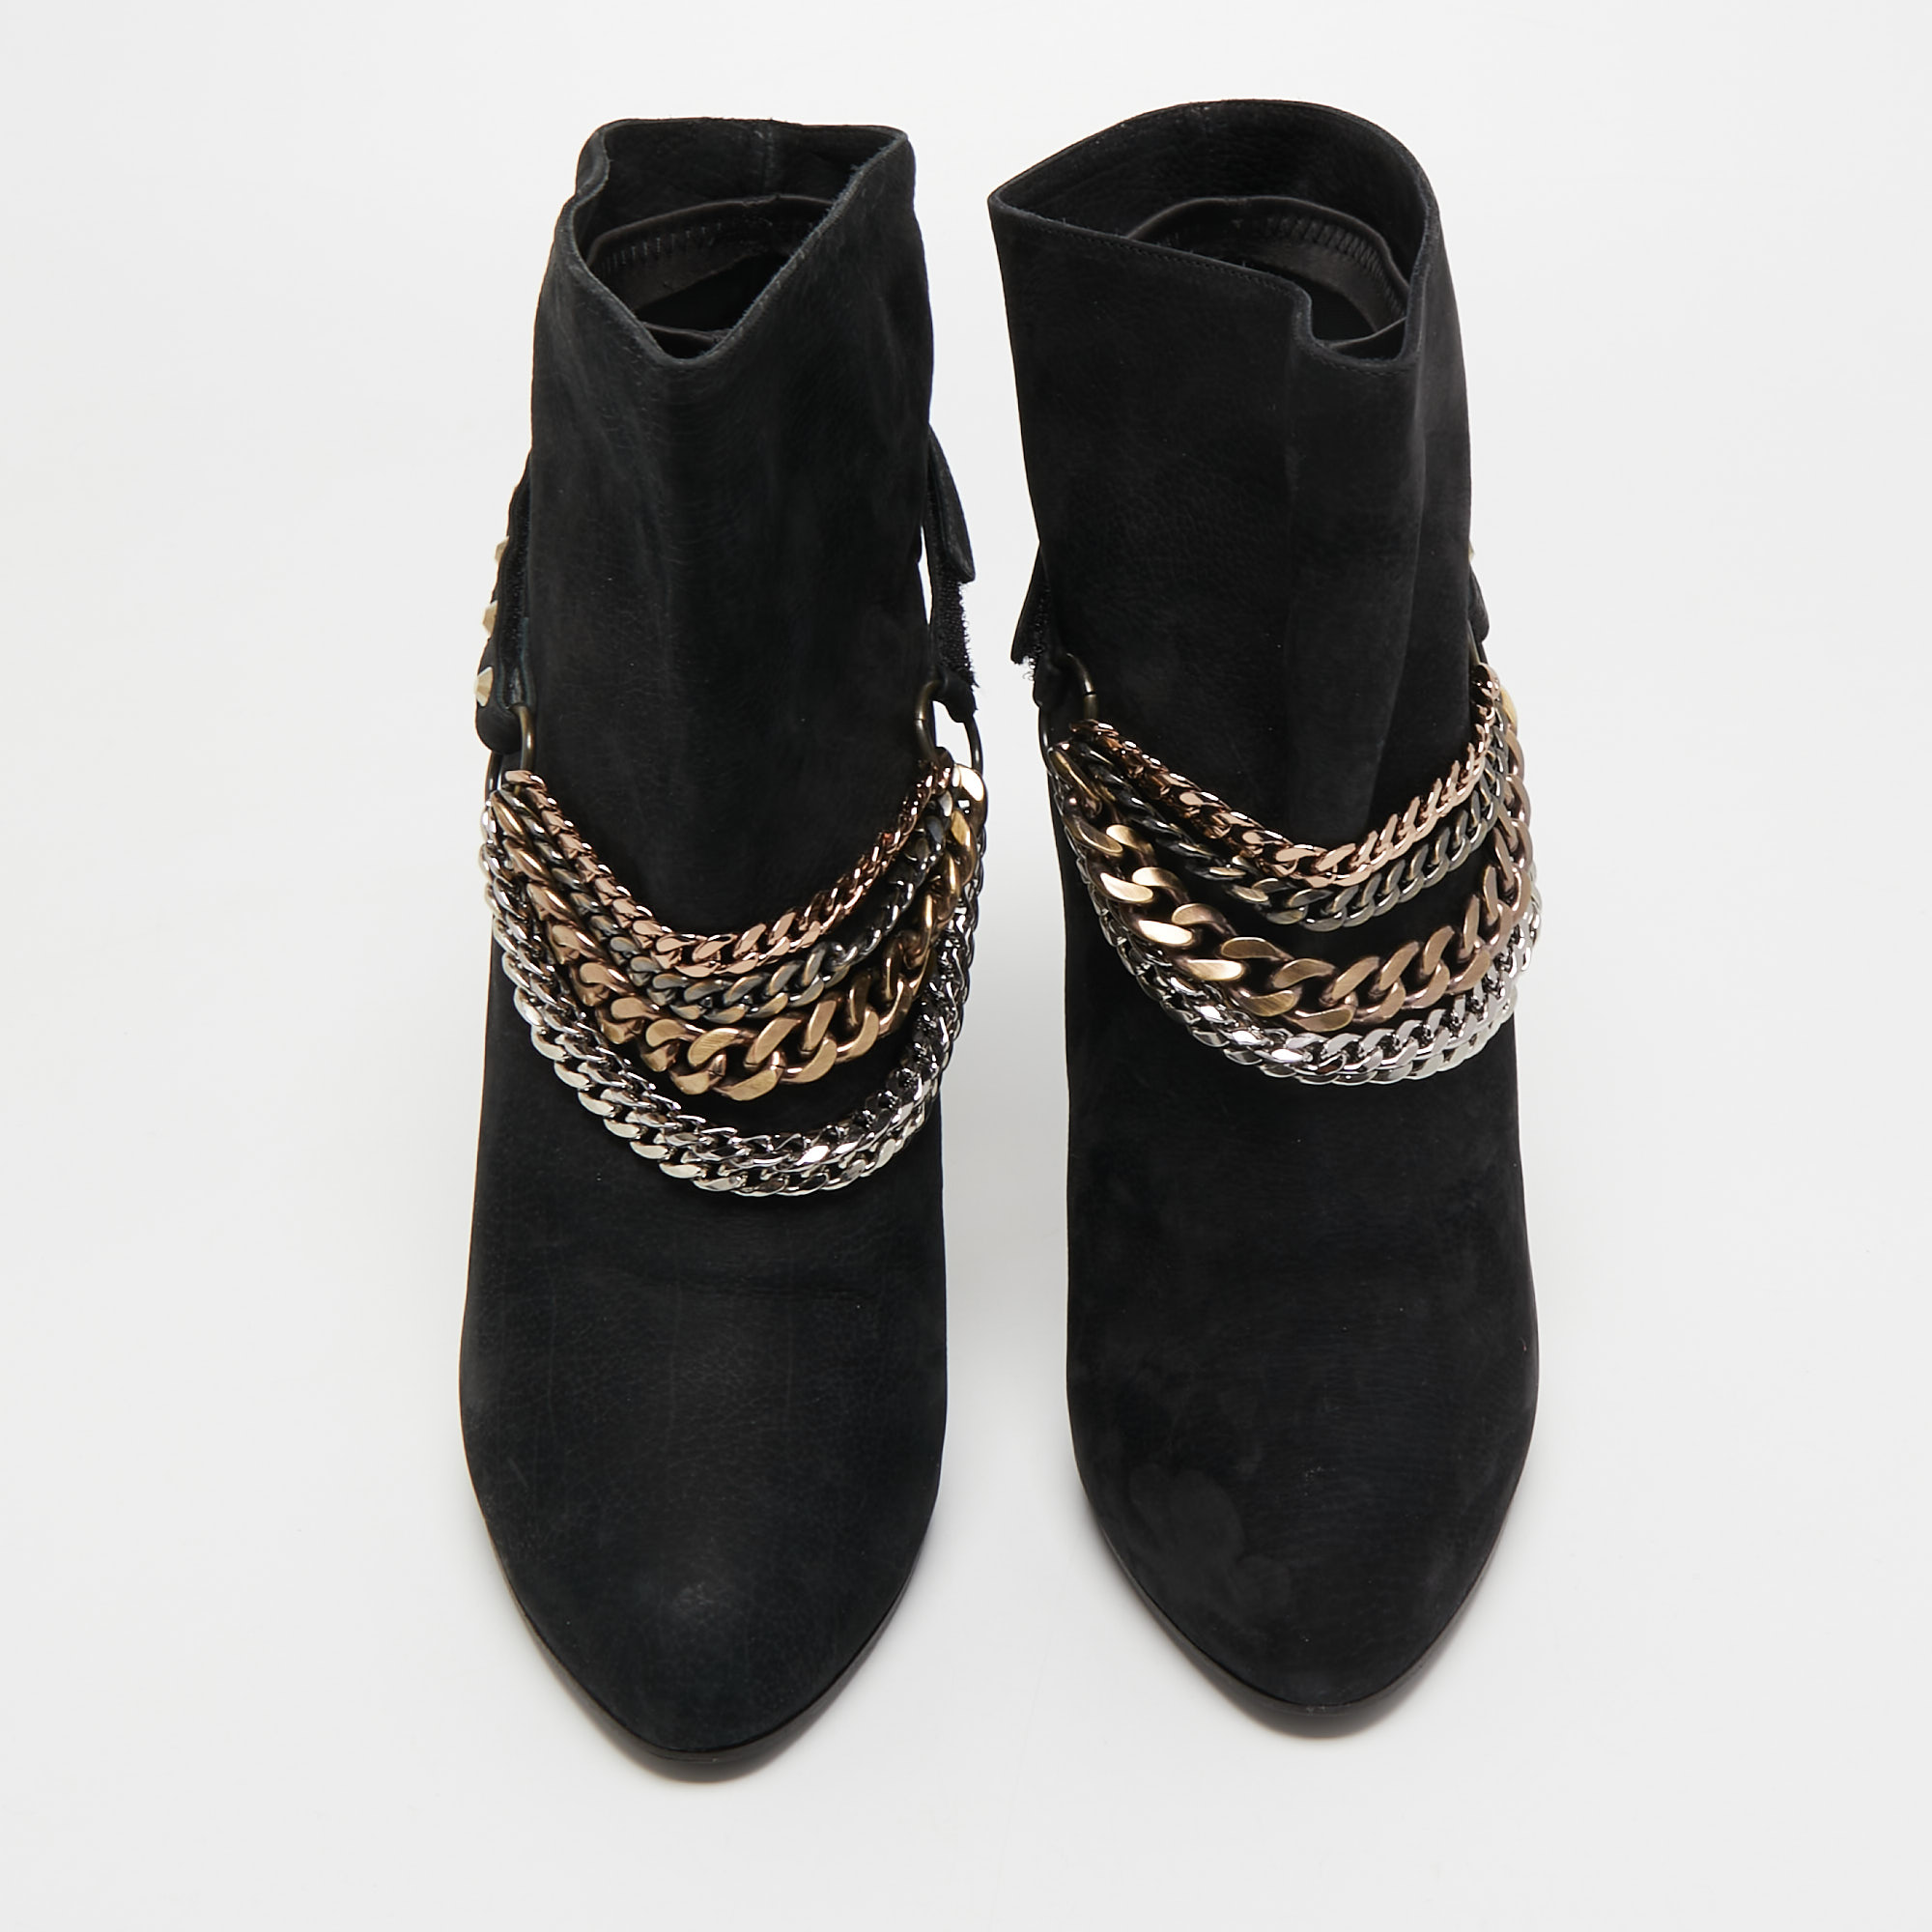 Le Silla Black Nubuck Leather Stivaletto Ankle Boots Size 40